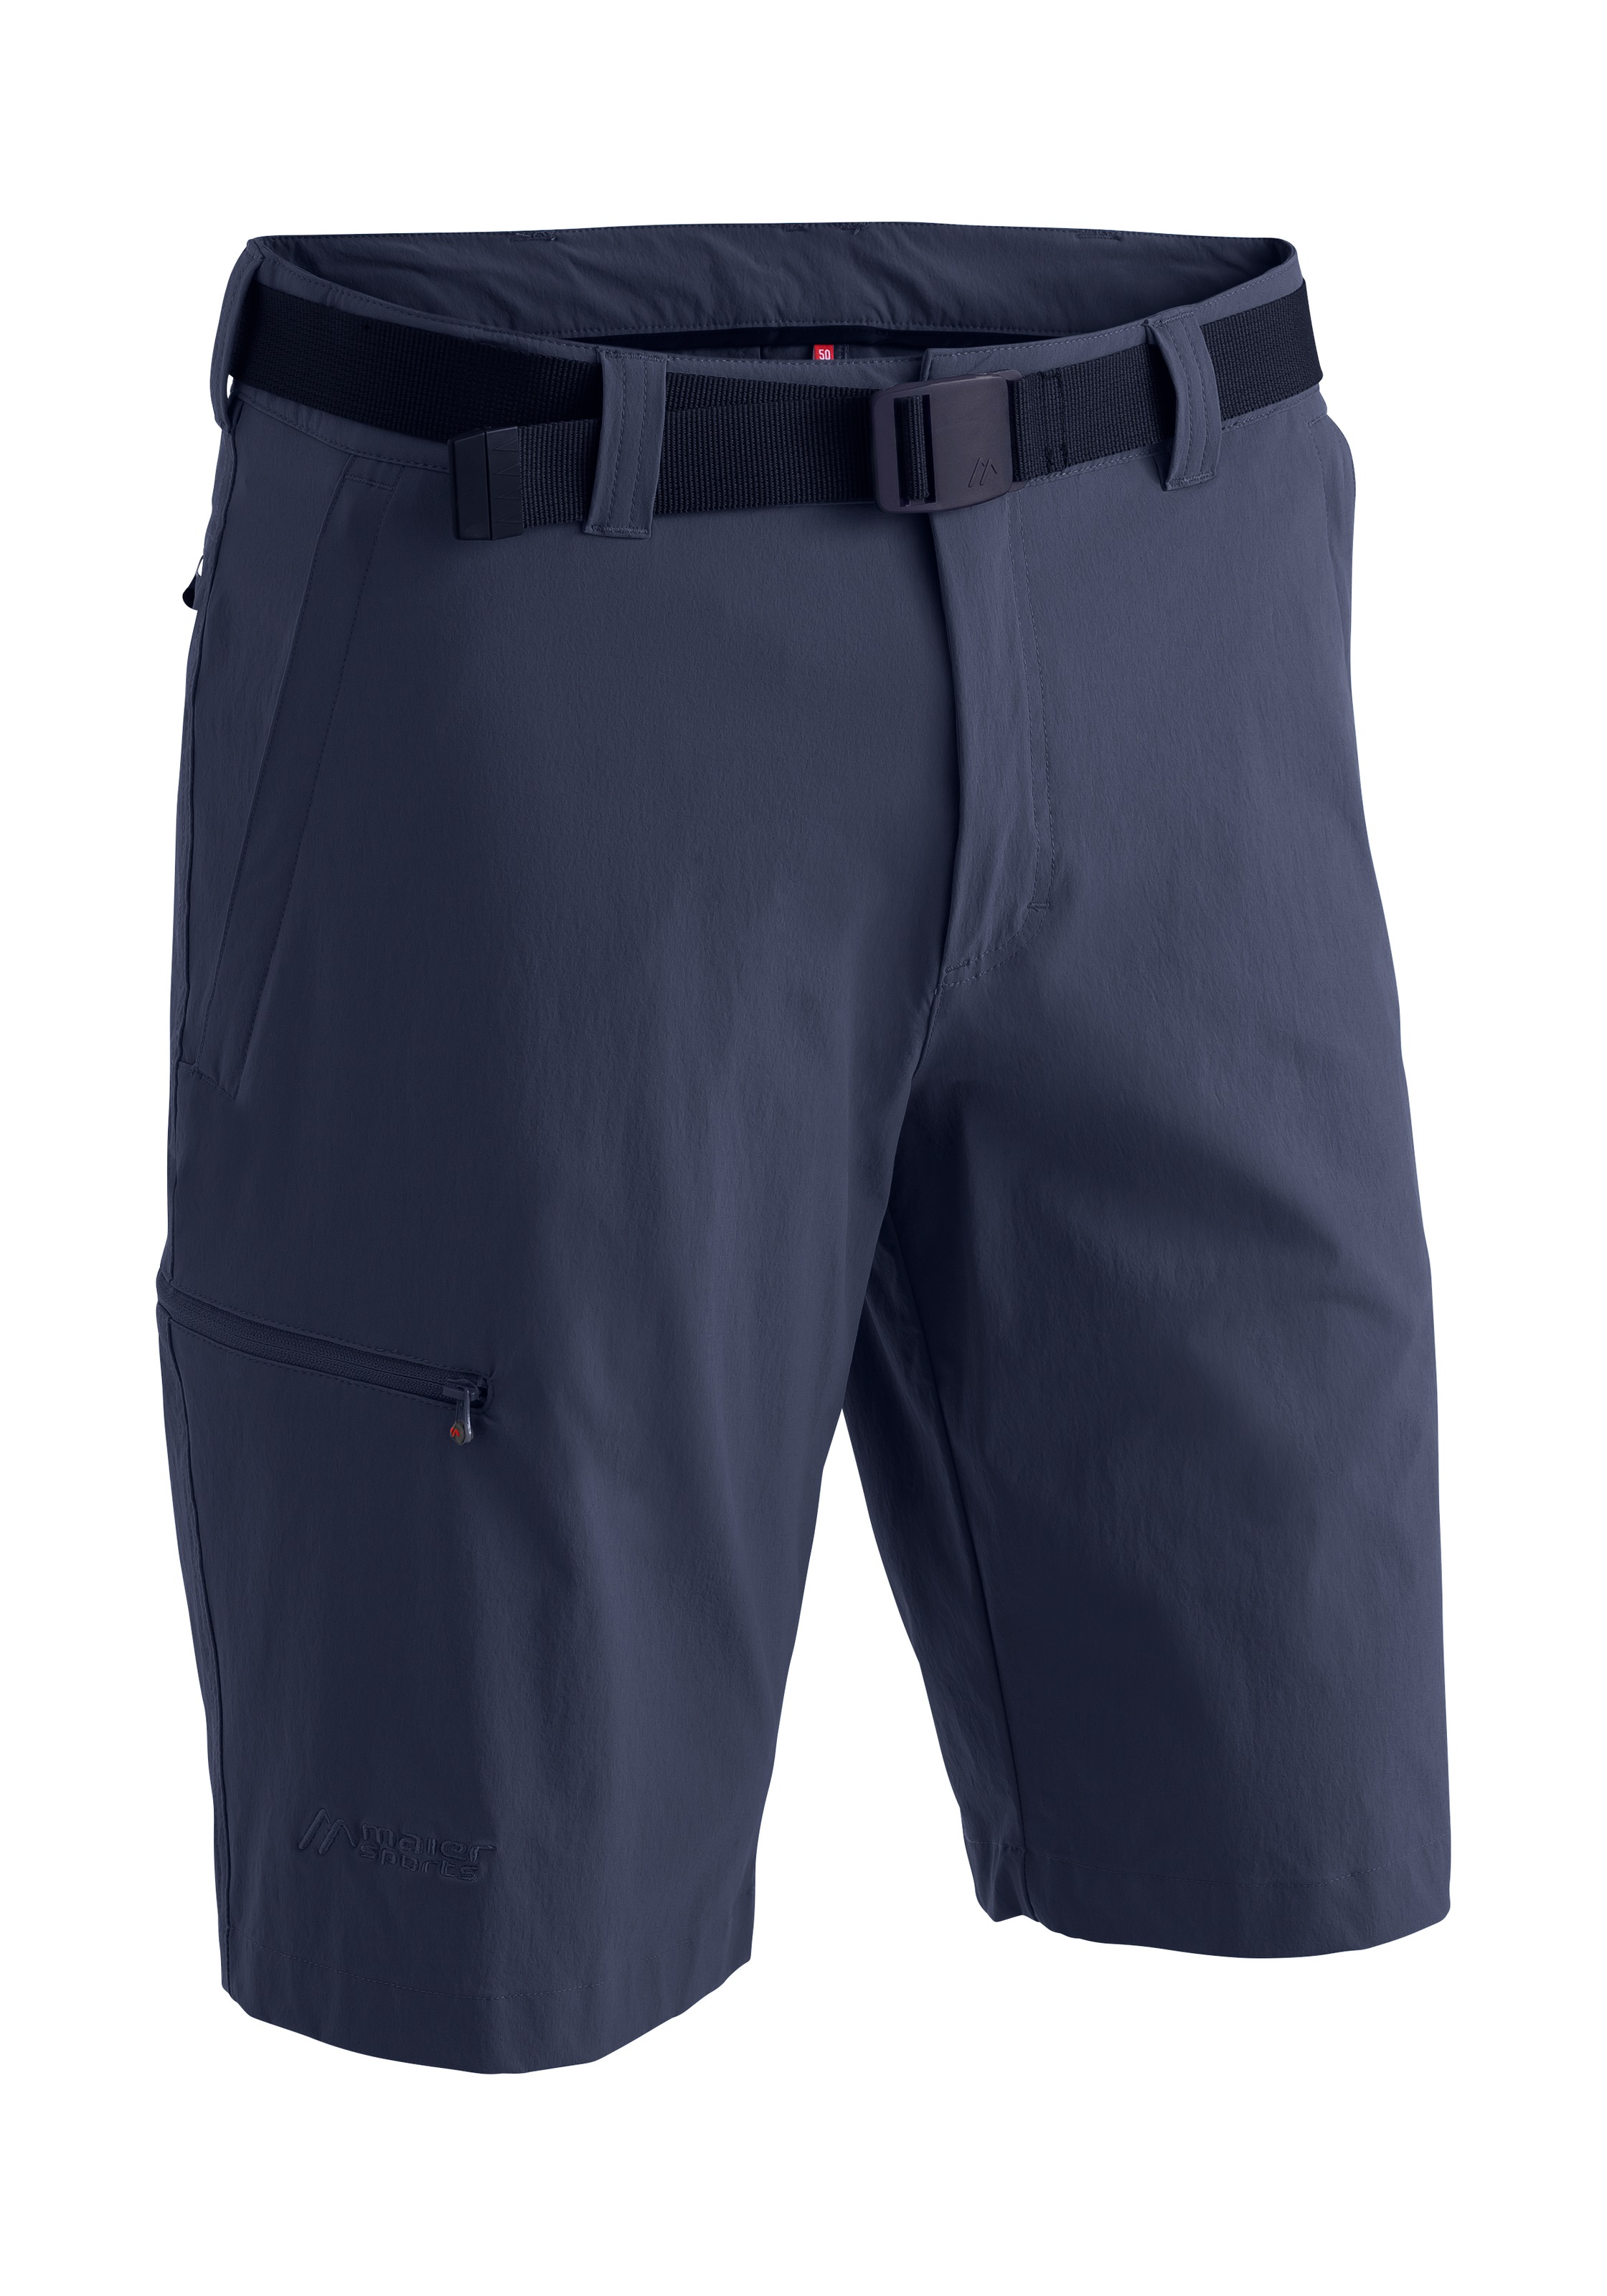 Maier Sports Funktionsshorts "Huang", Herren Shorts, kurze Outdoor-Hose, Bermudas mit 4 Taschen, Regular Fit